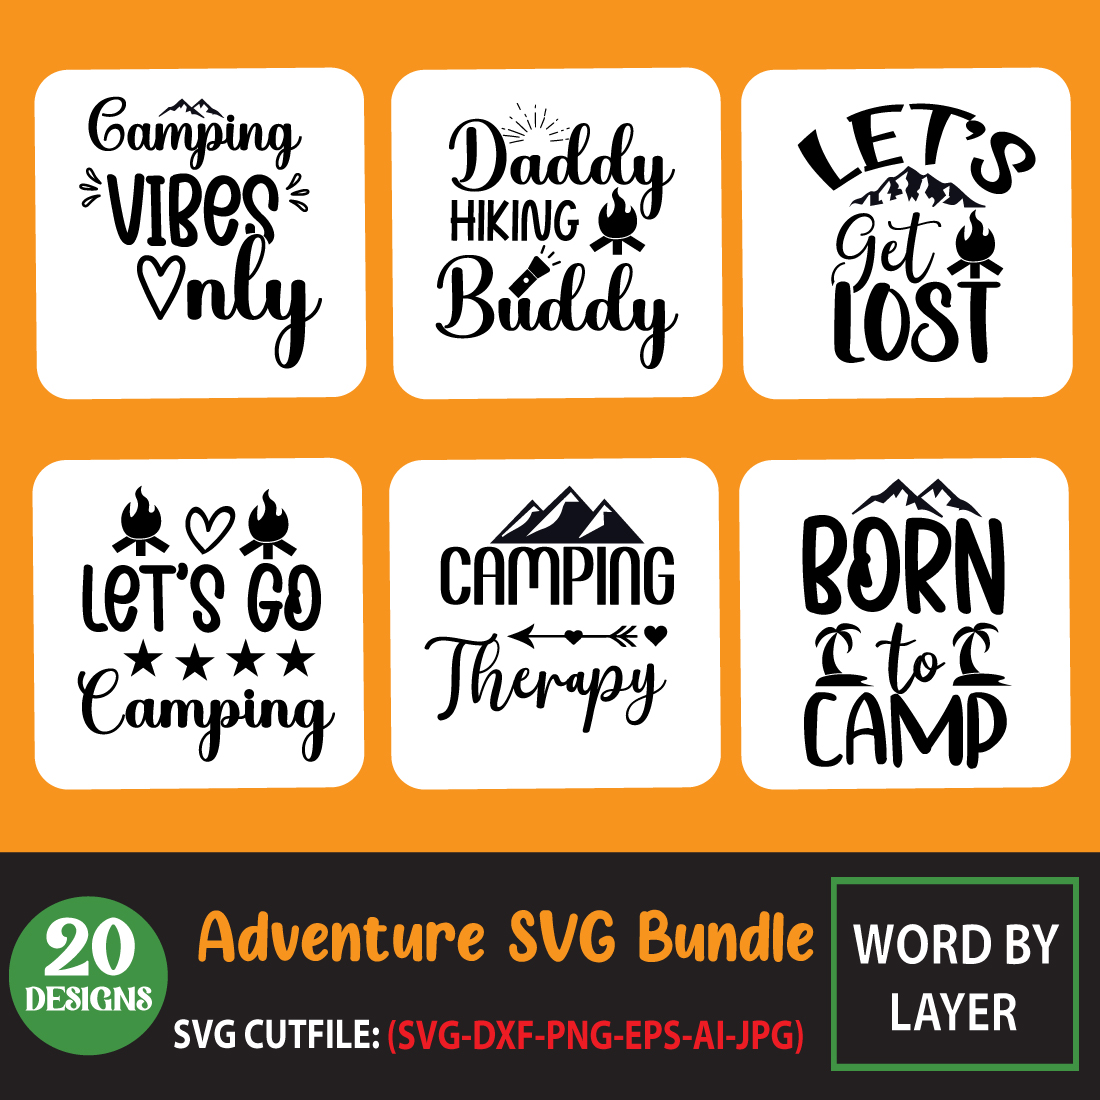 Adventure SVG Bundle cover image.